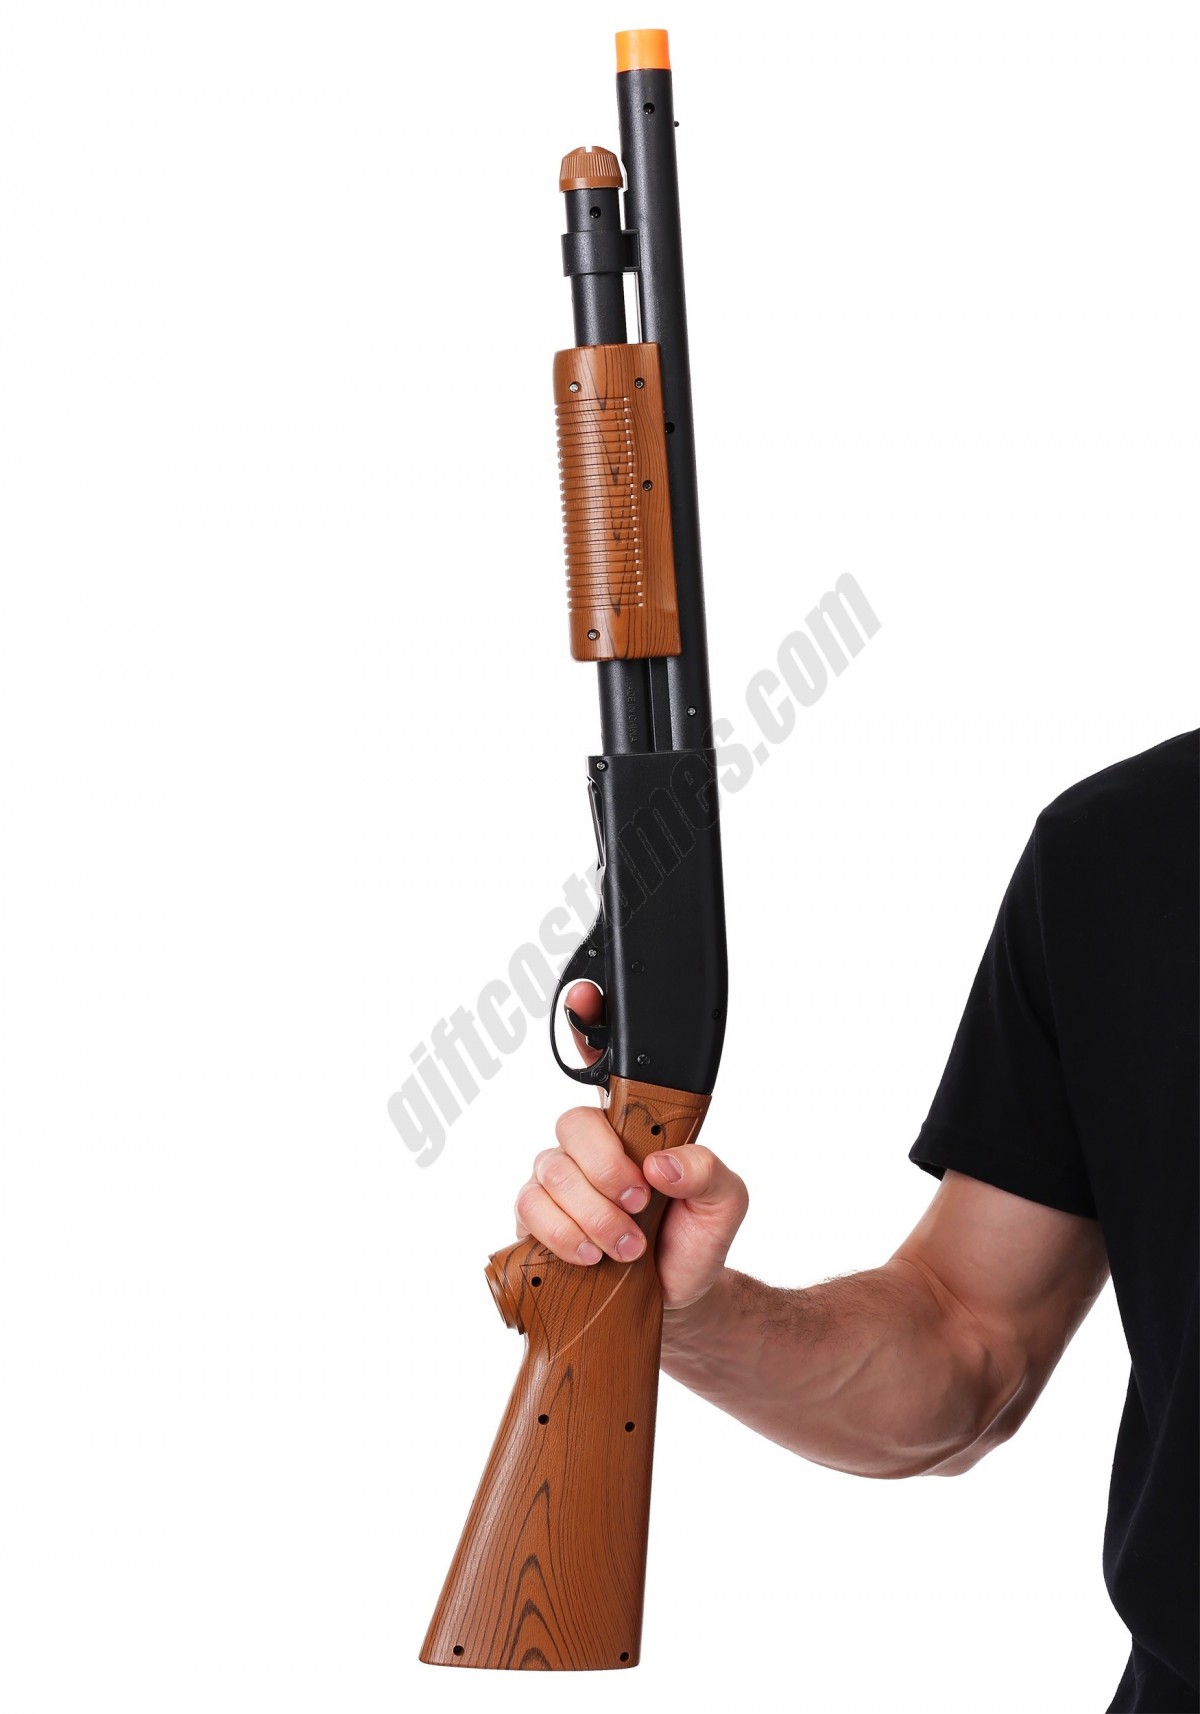 Pump Action Shotgun Toy Weapon Promotions - -0